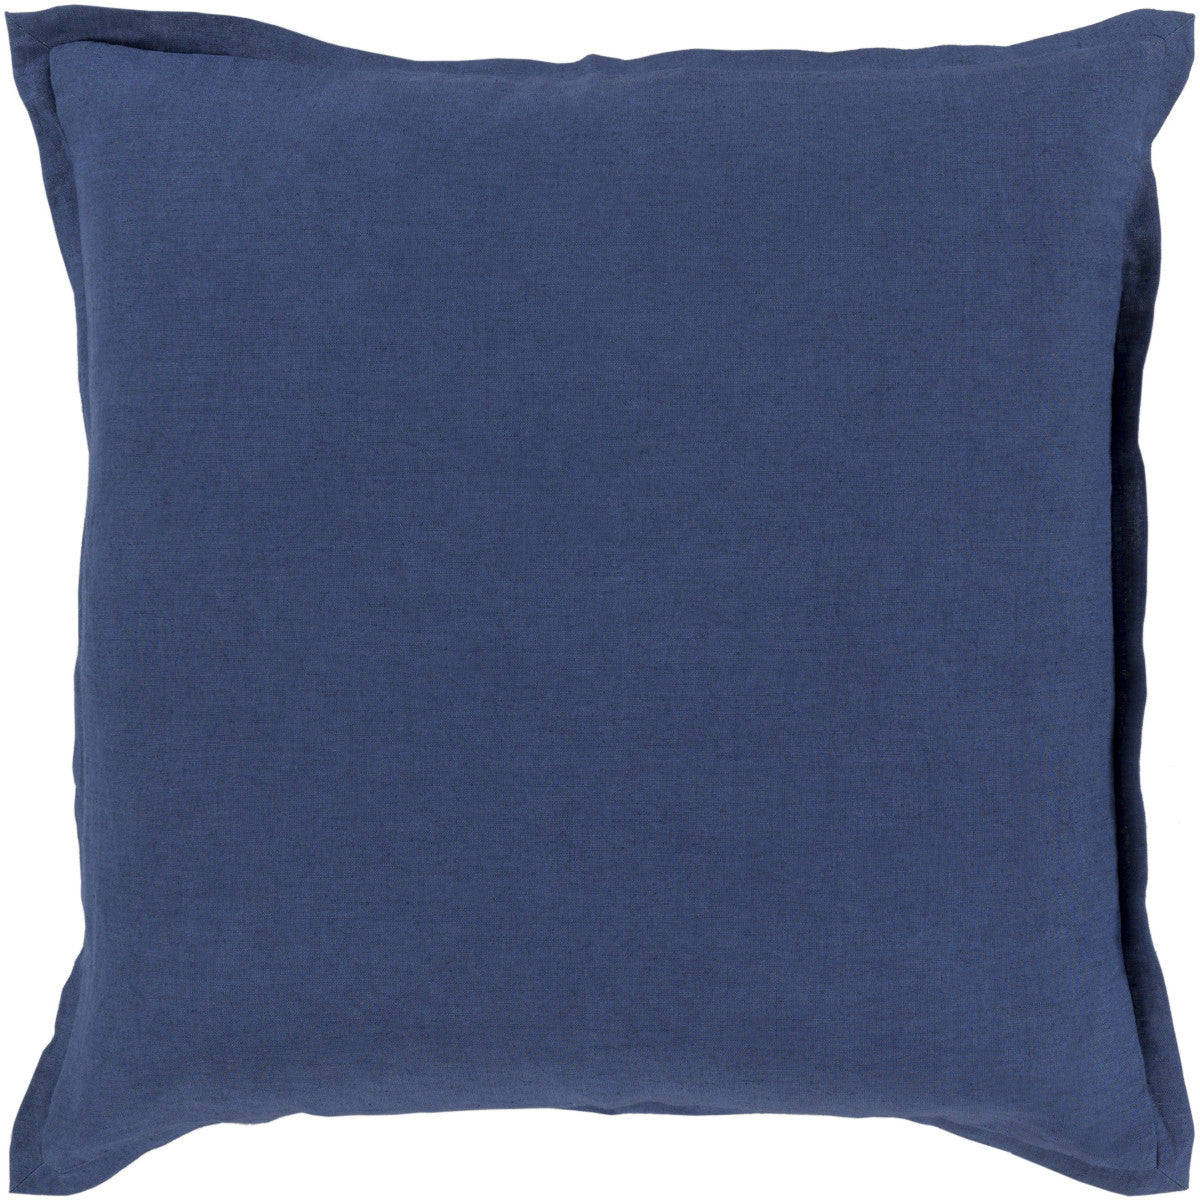 Surya Orianna OR011 Pillow